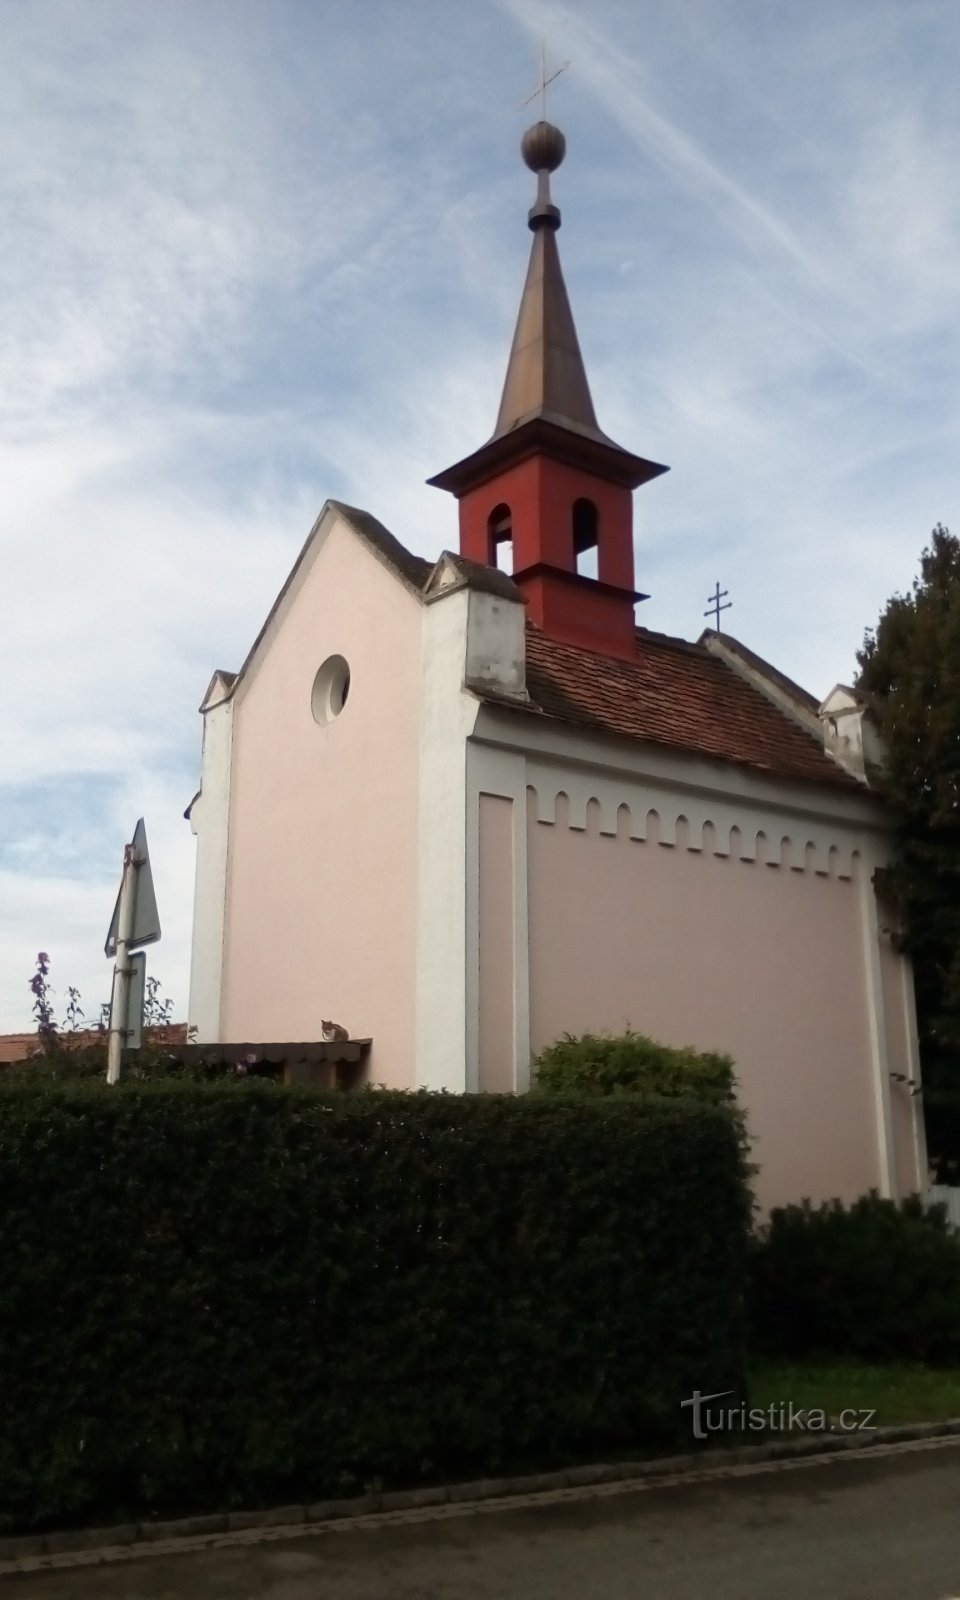 Kapel van St. Václav in Mnětice